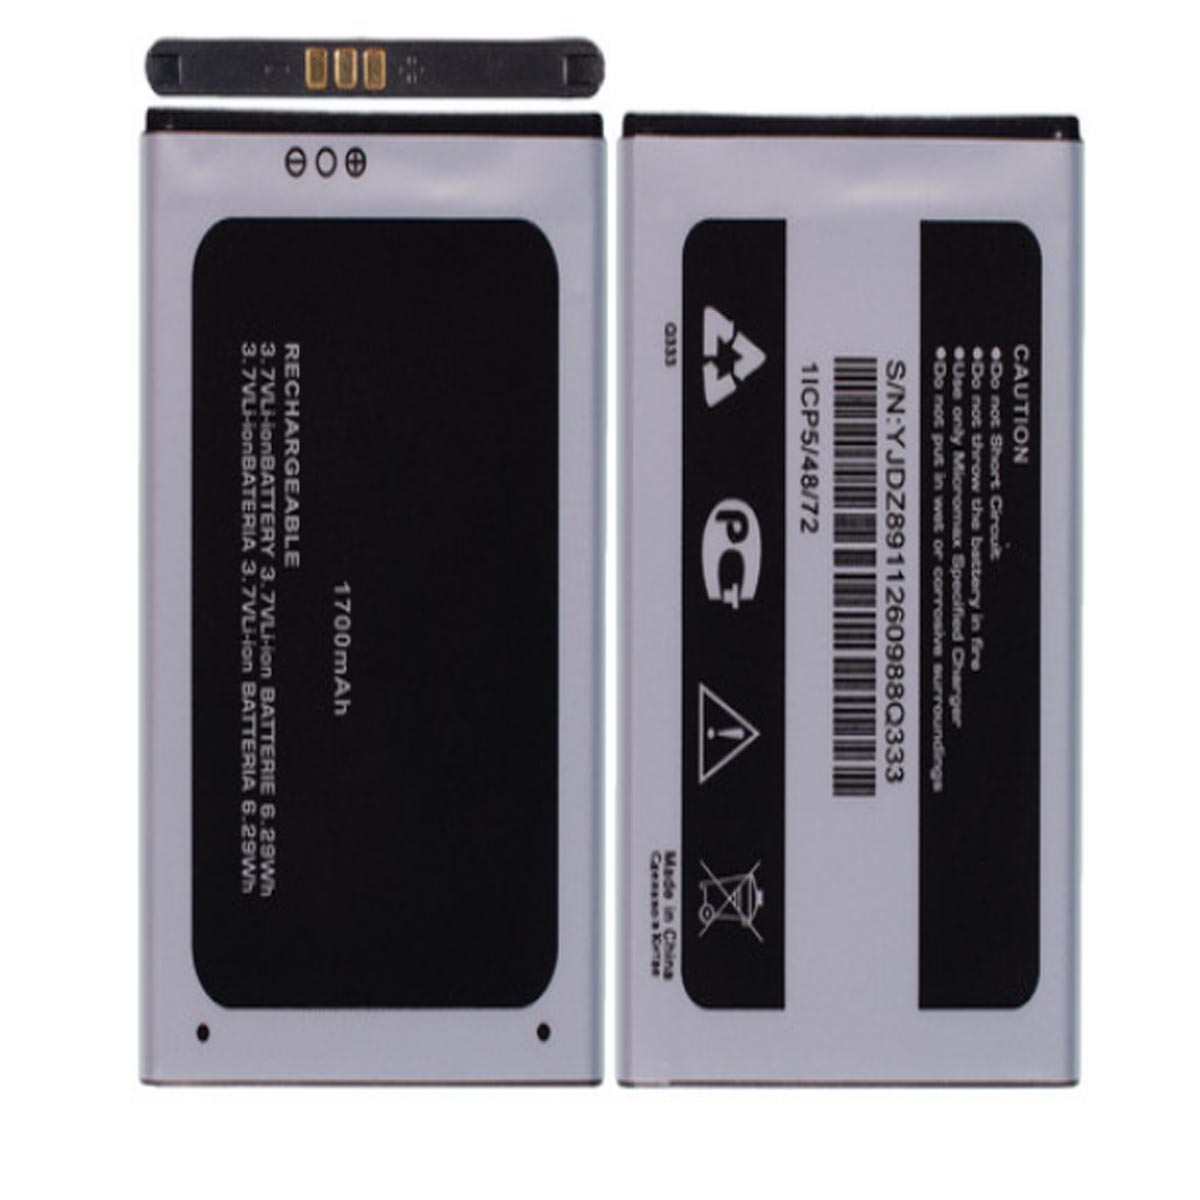 АКБ (Аккумулятор) для MICROMAX Q333, 2000 mAh, цвет серый